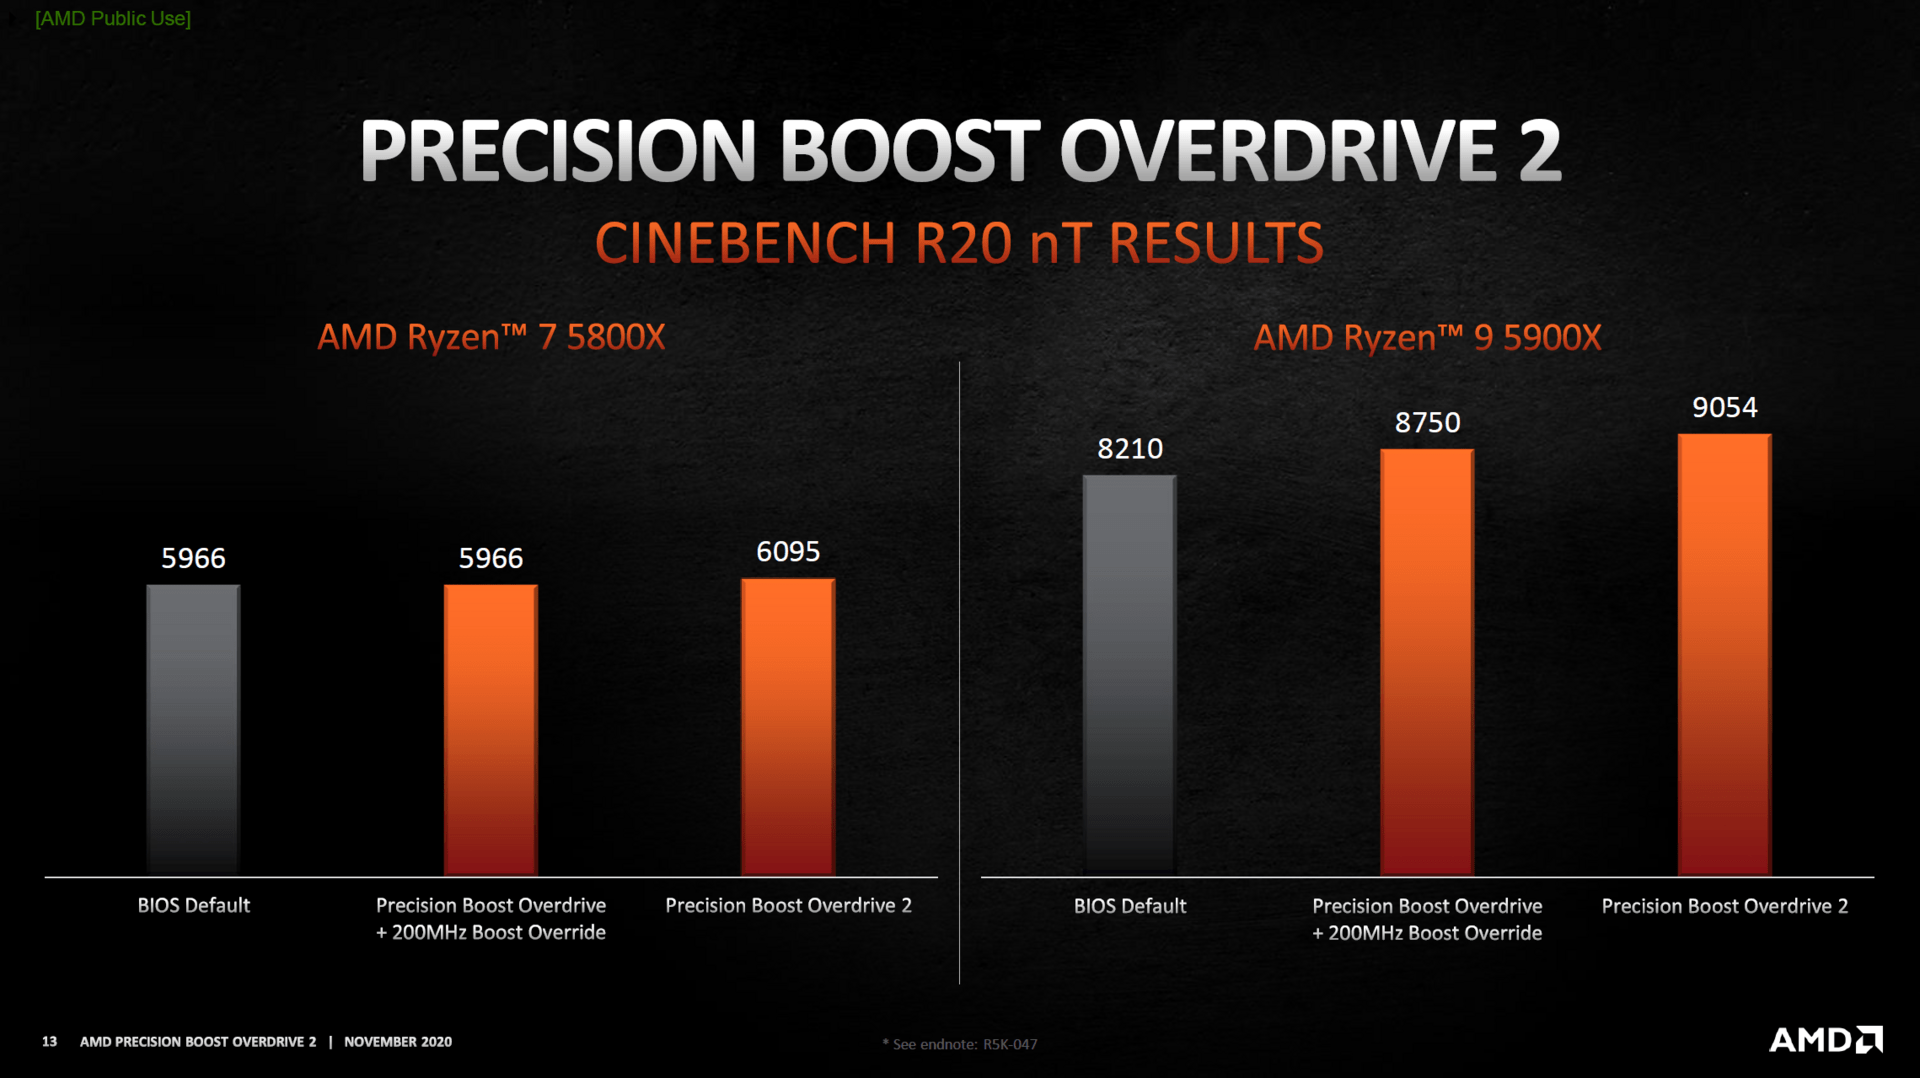 Ergebnisse laut AMD in CB R20 nT